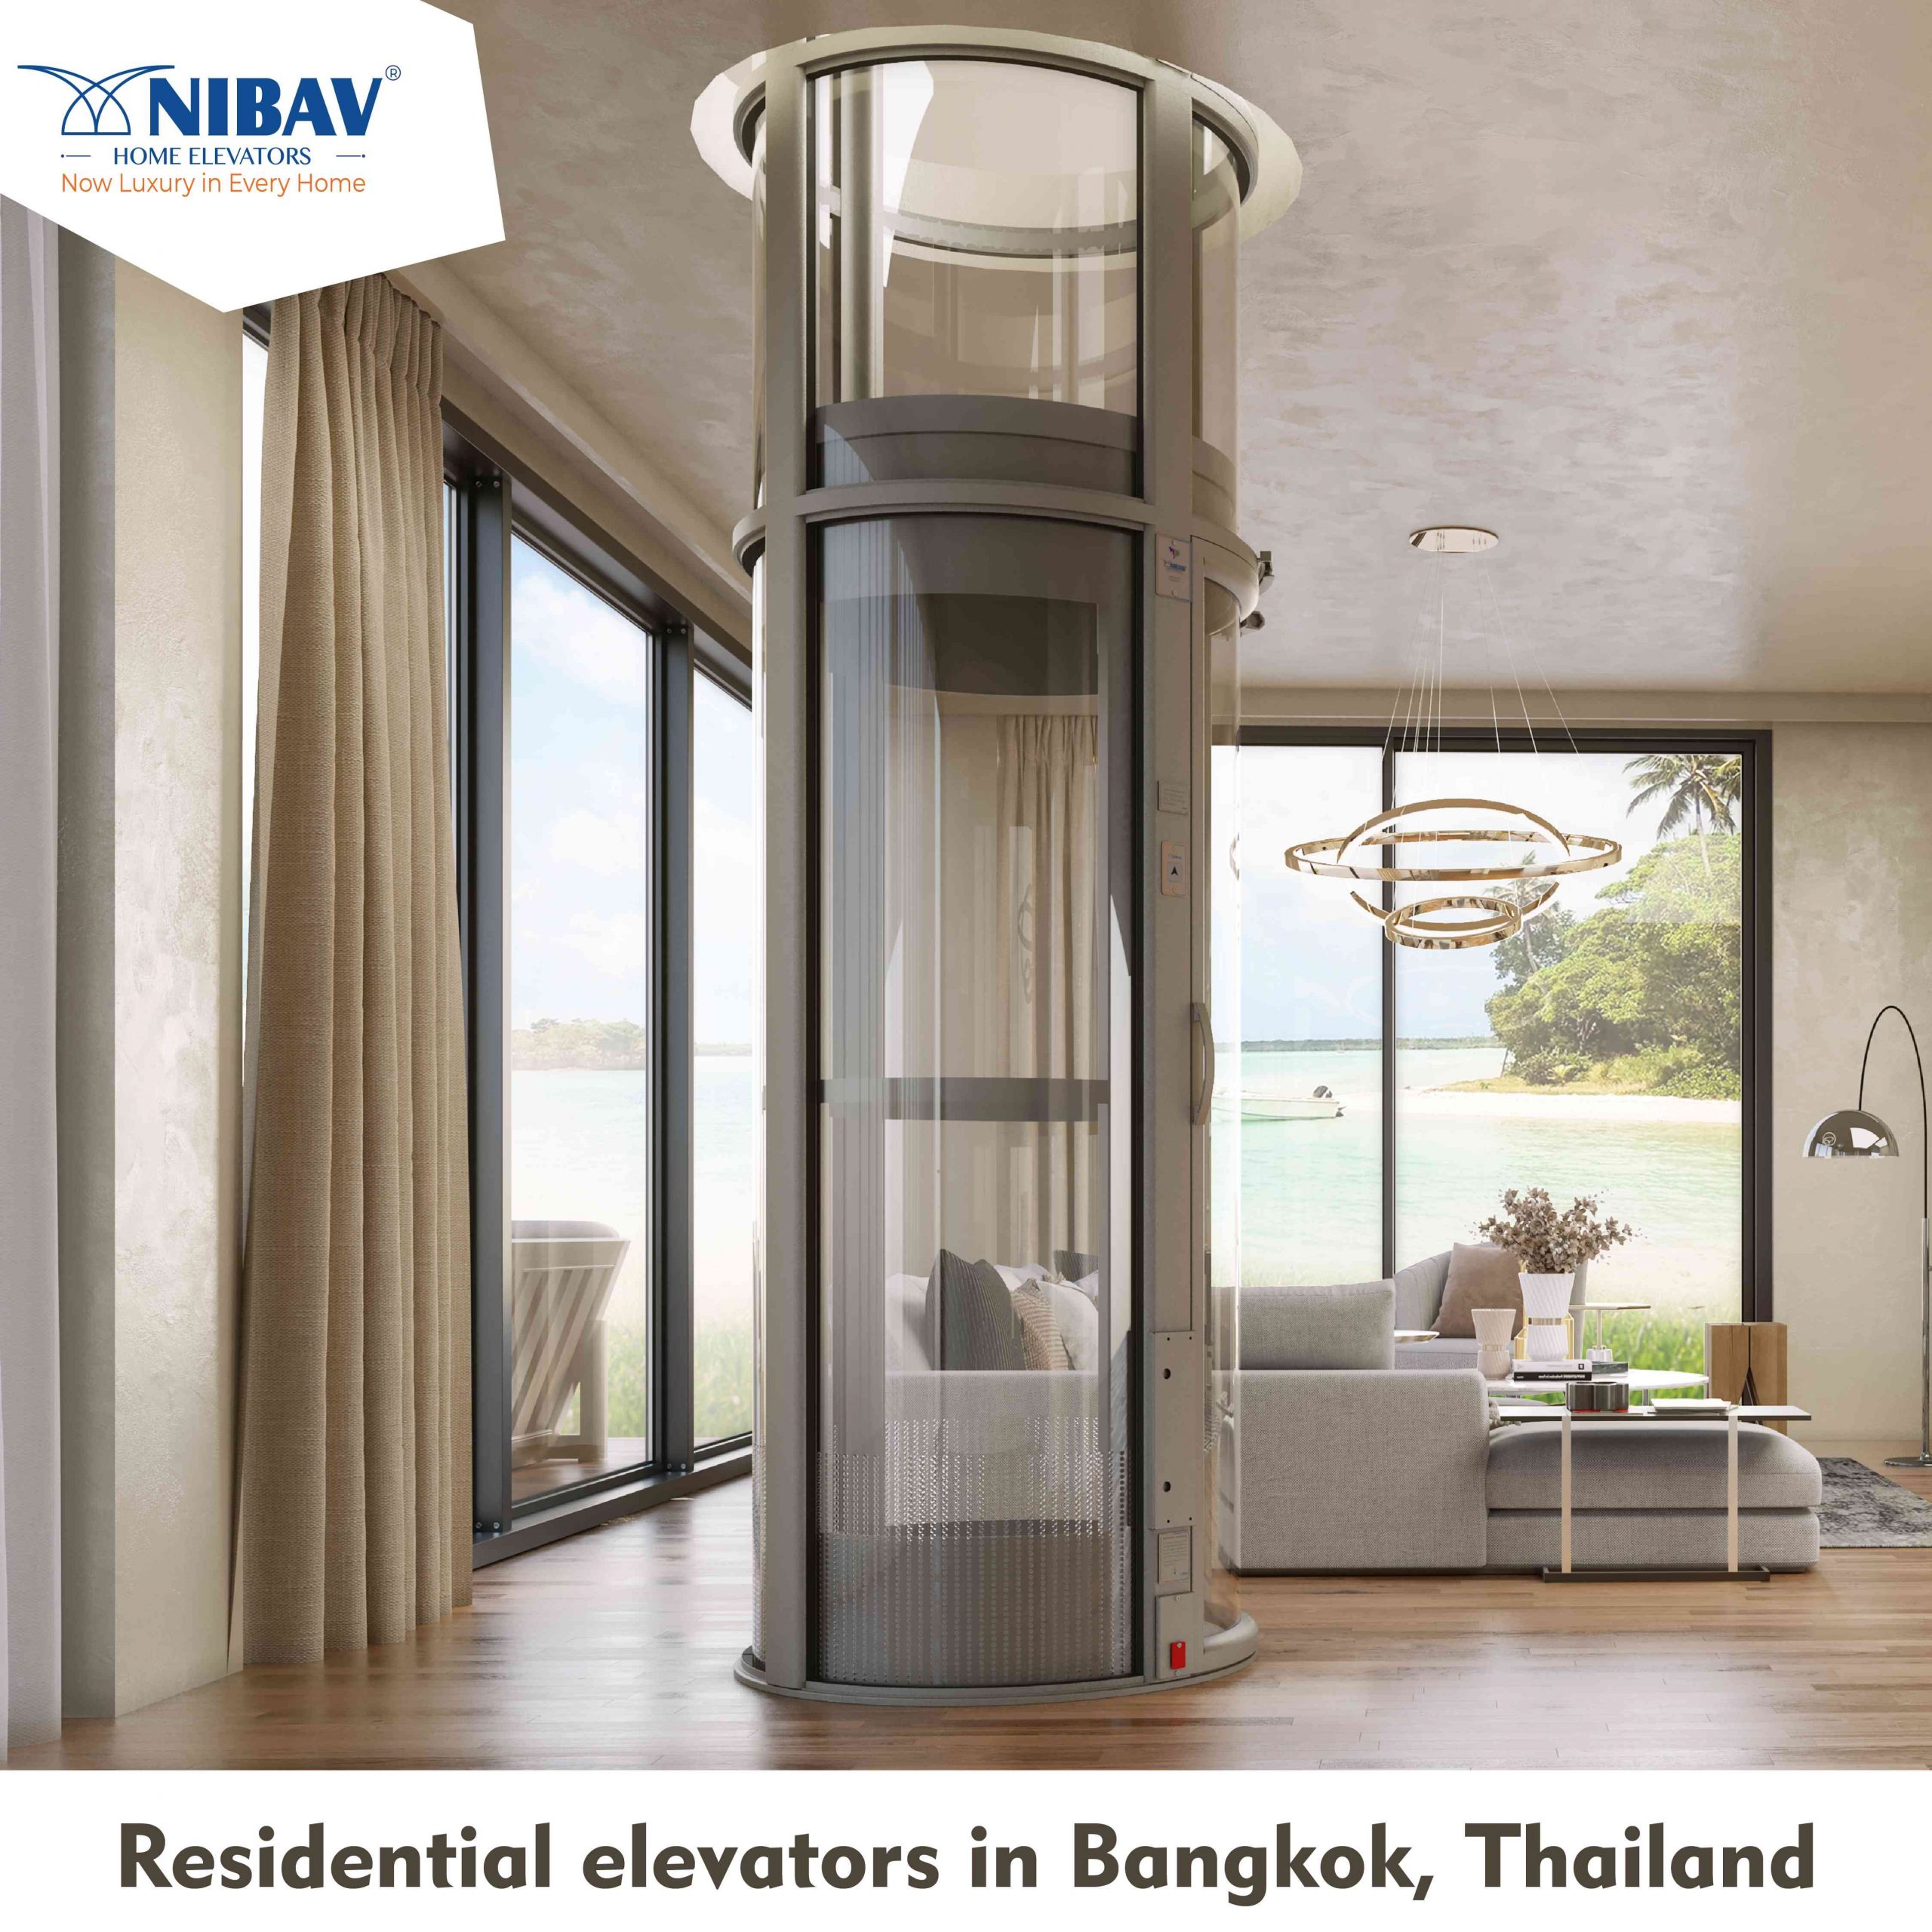 Residential elevators in Bangkok, Thailand